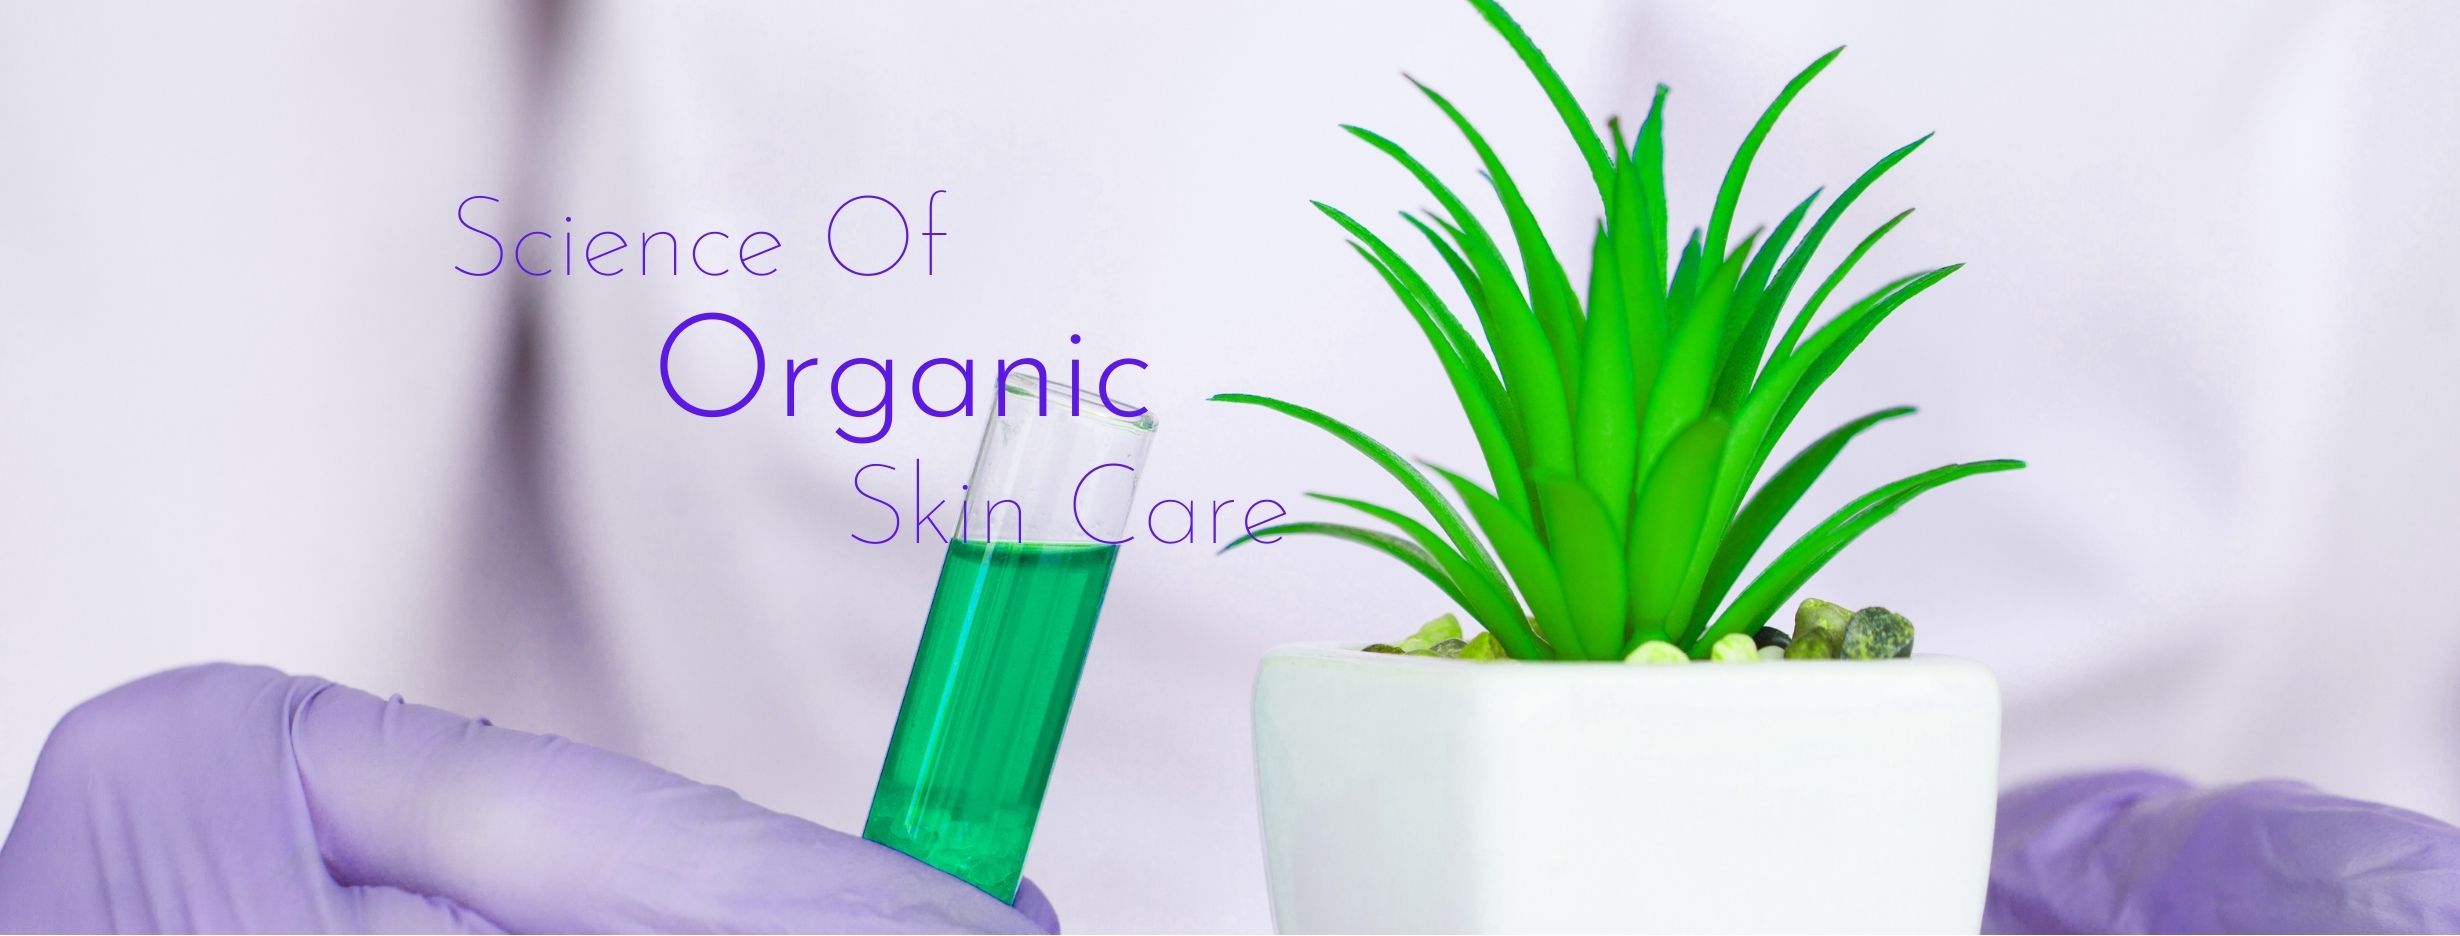 science of organic skin care